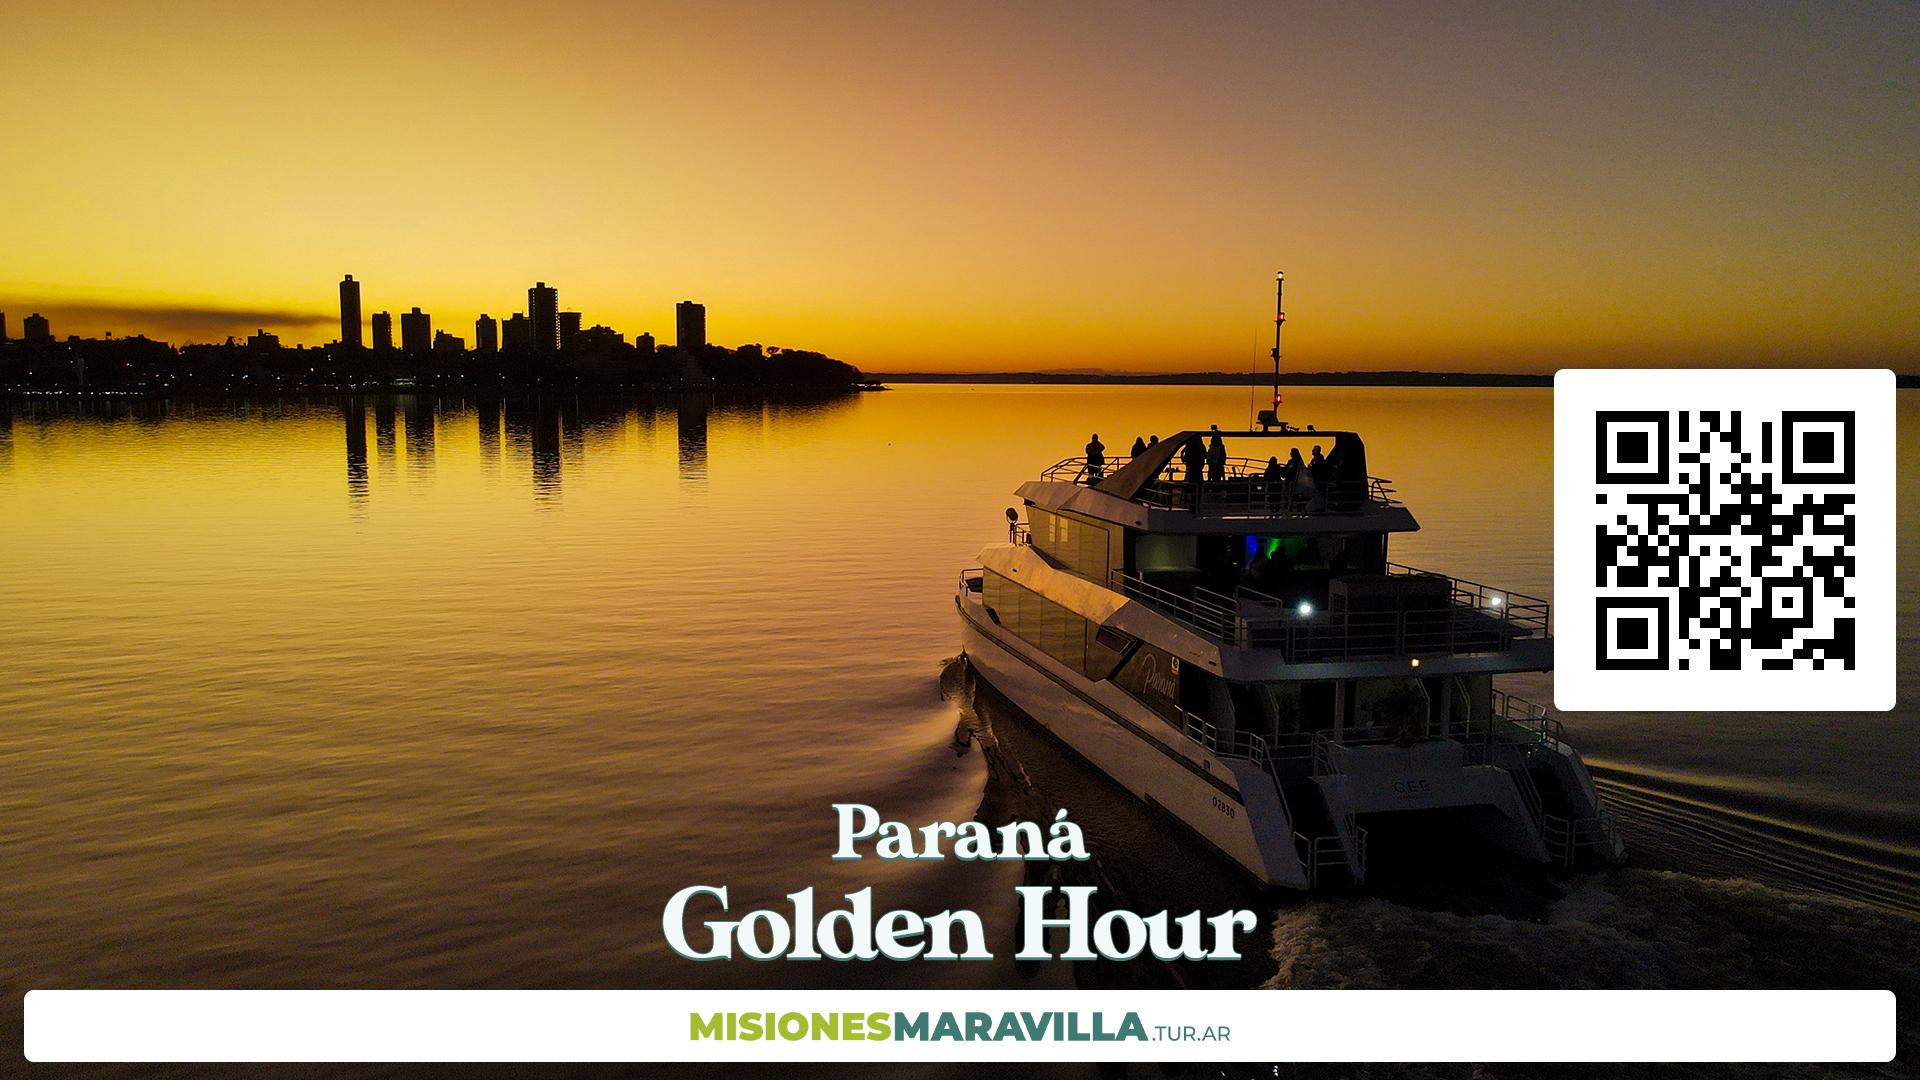 paseo en catamarán - misiones maravilla evt - paraná golden hour